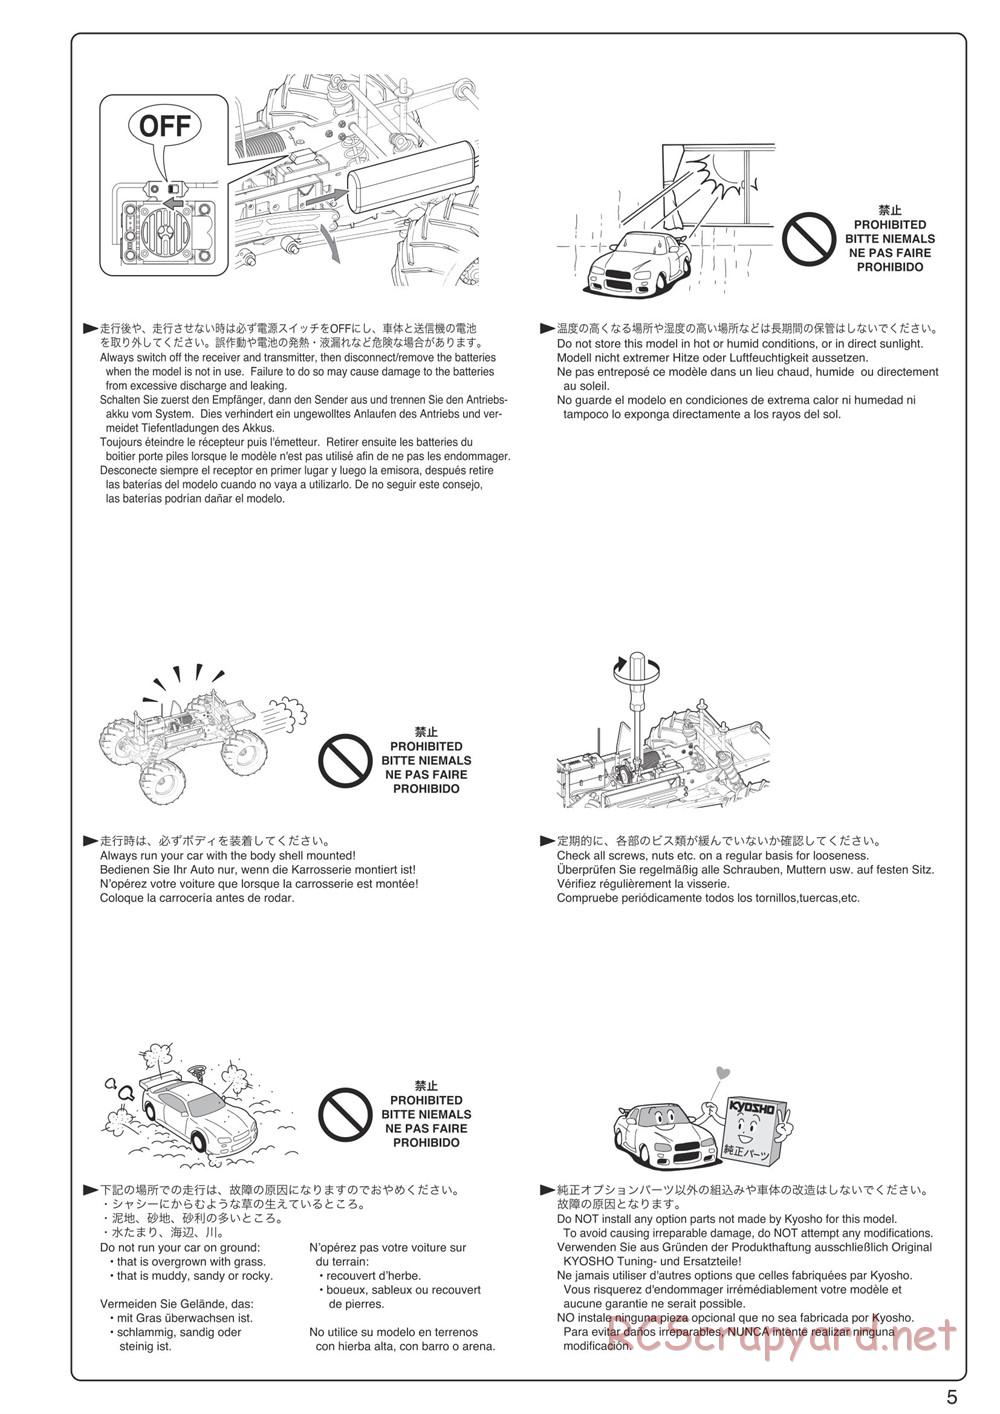 Kyosho - Mad Force Kruiser VE - Manual - Page 5